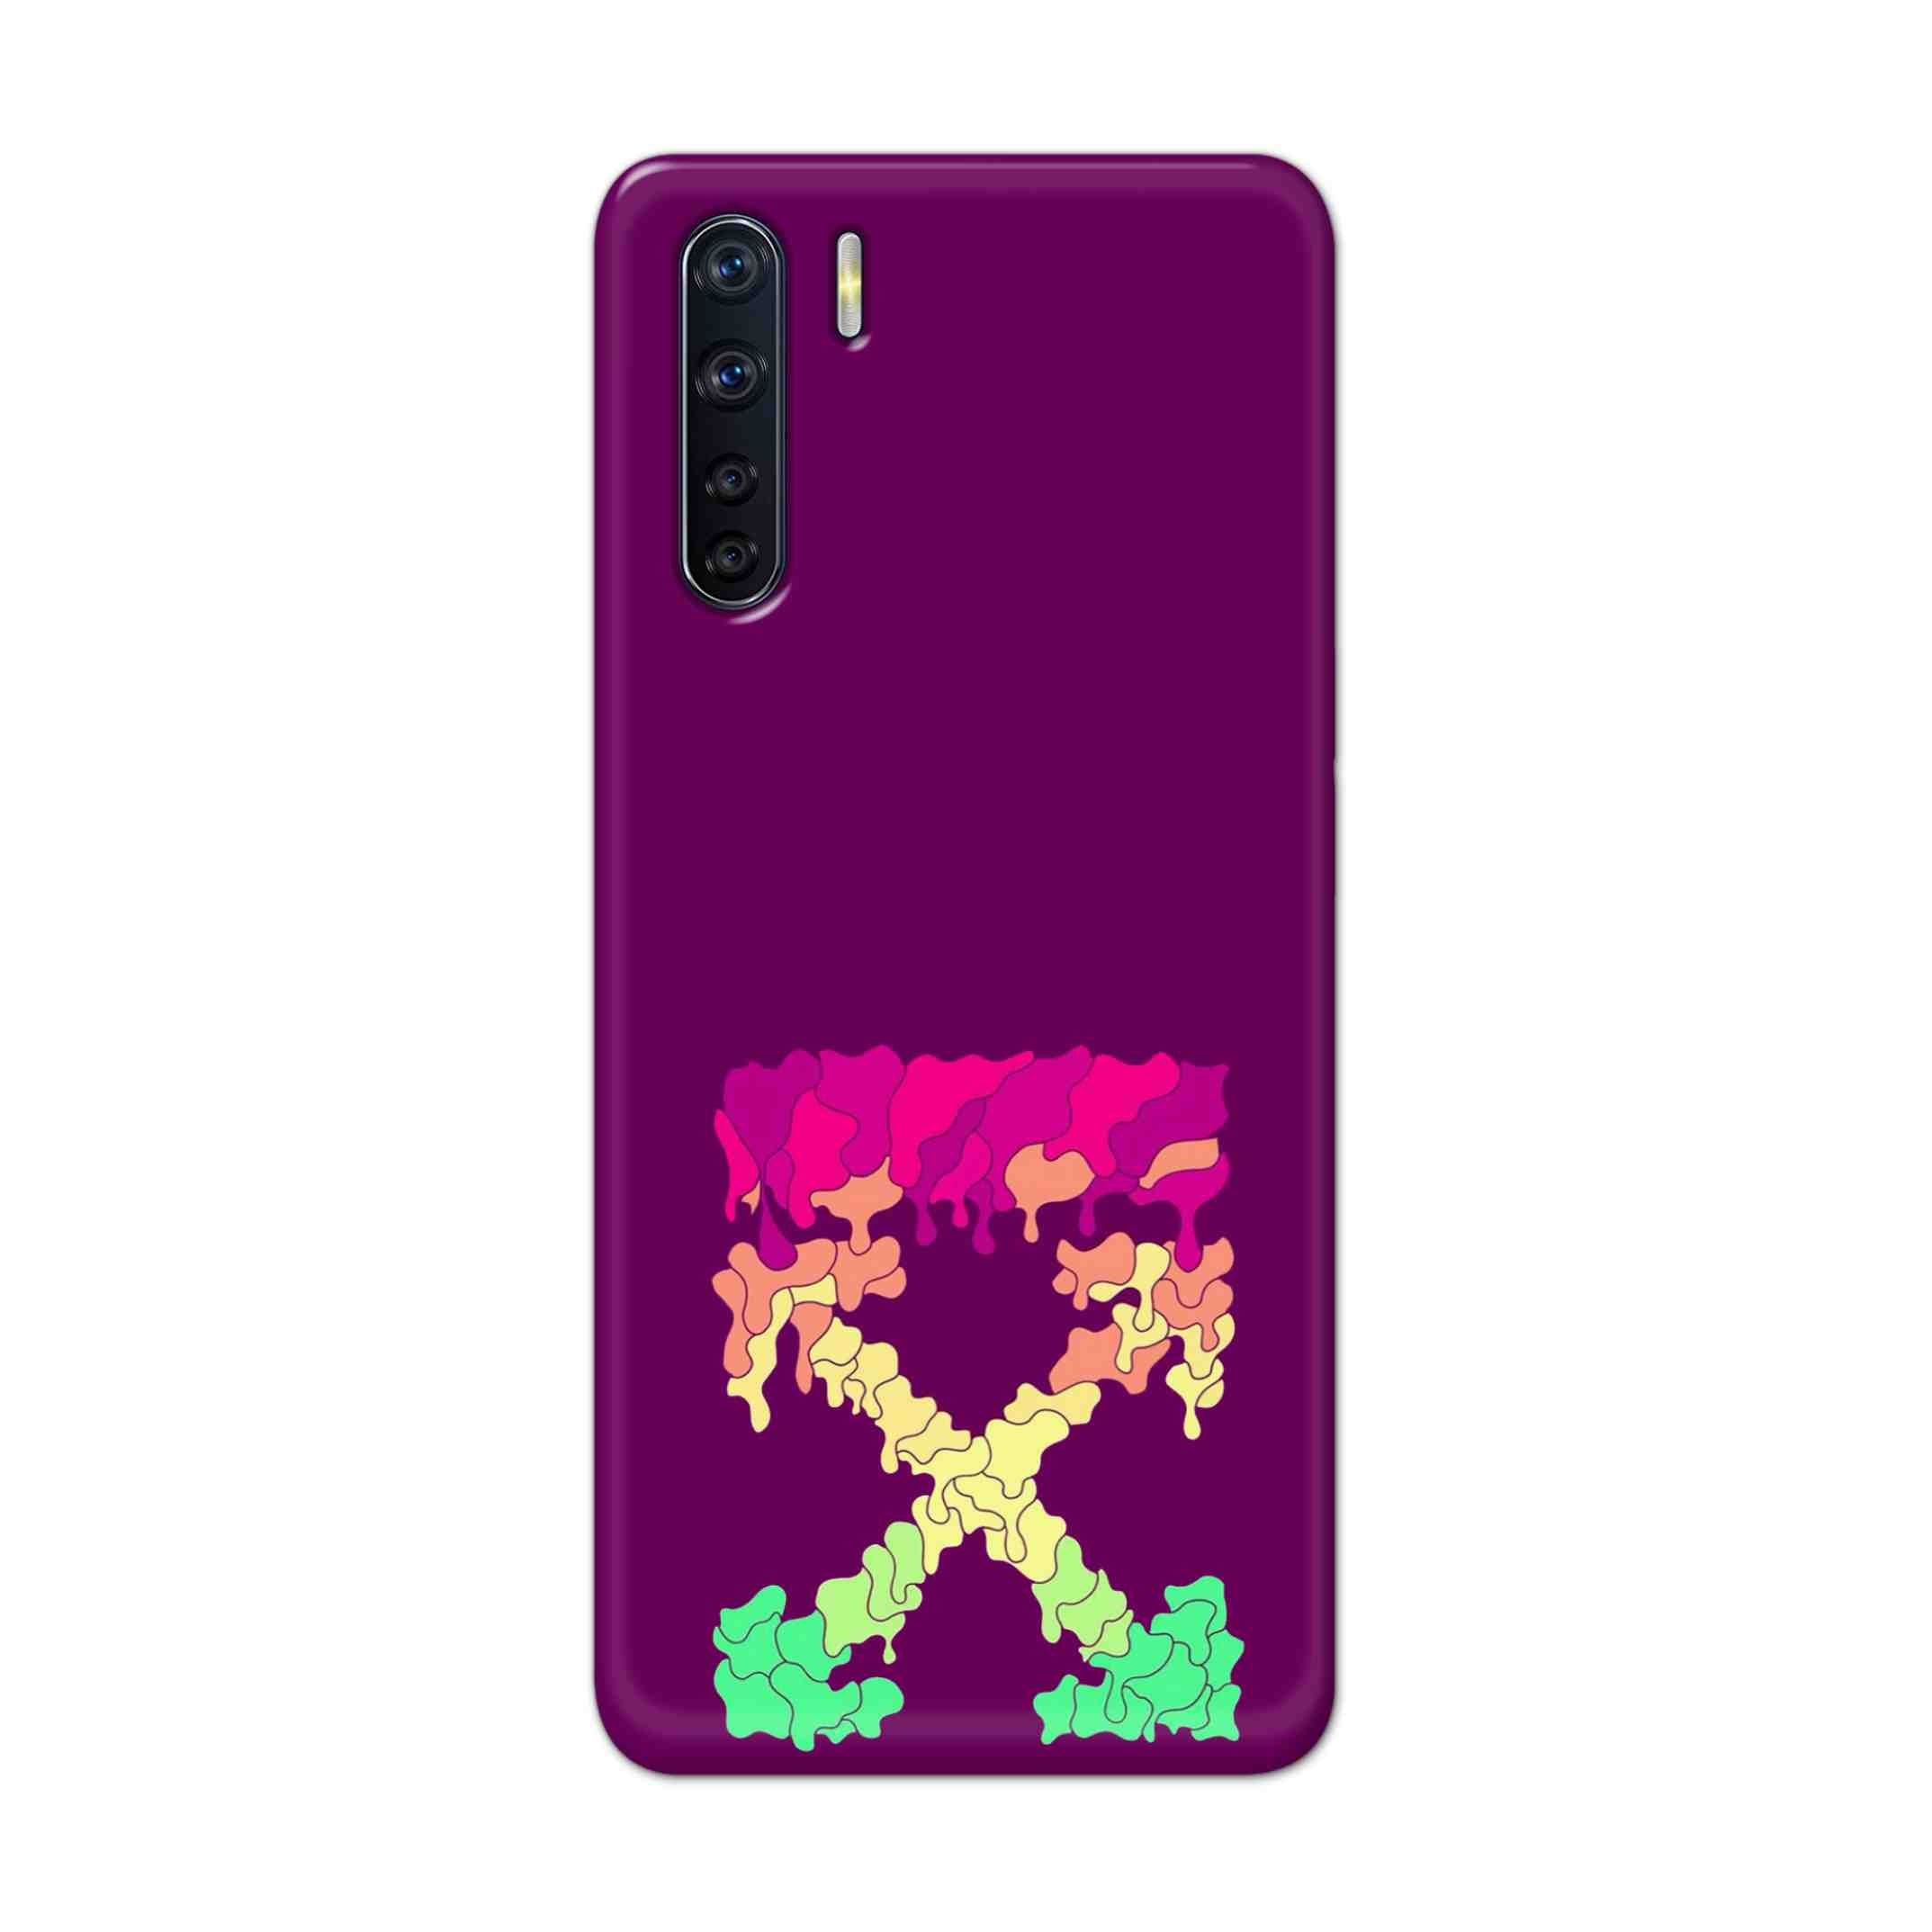 Buy X.O Hard Back Mobile Phone Case Cover For OPPO F15 Online